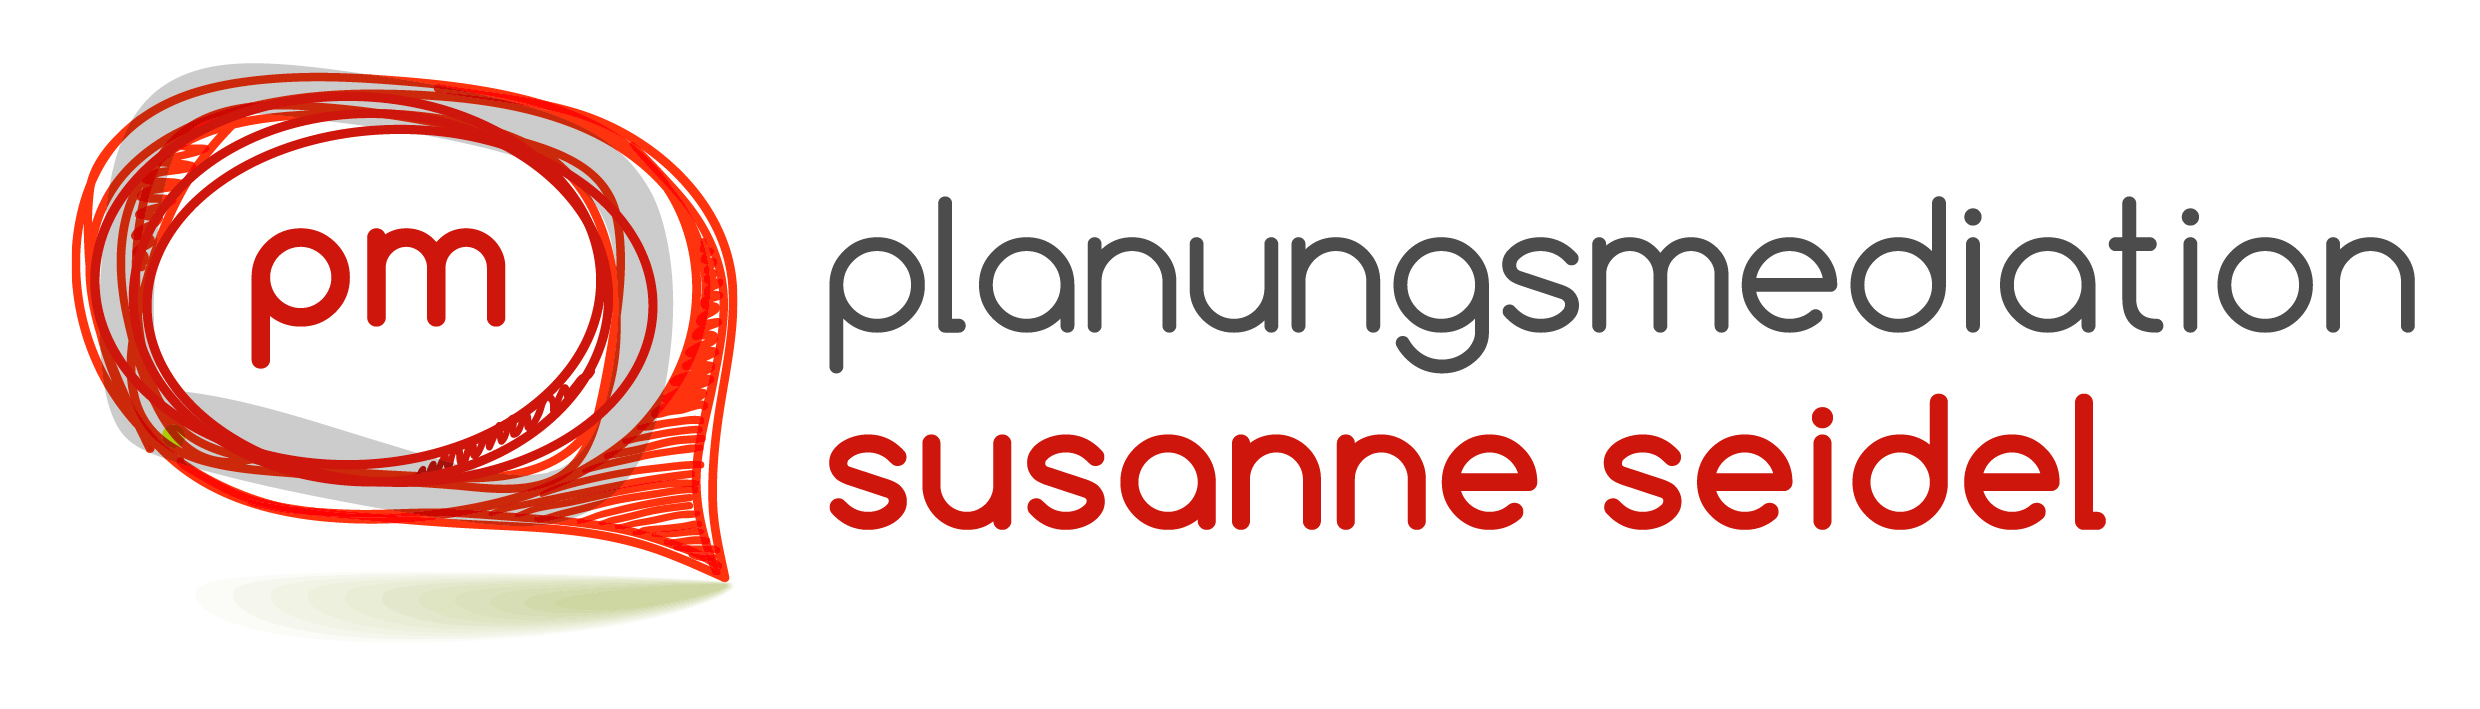 pm planungsmediation (Logo)